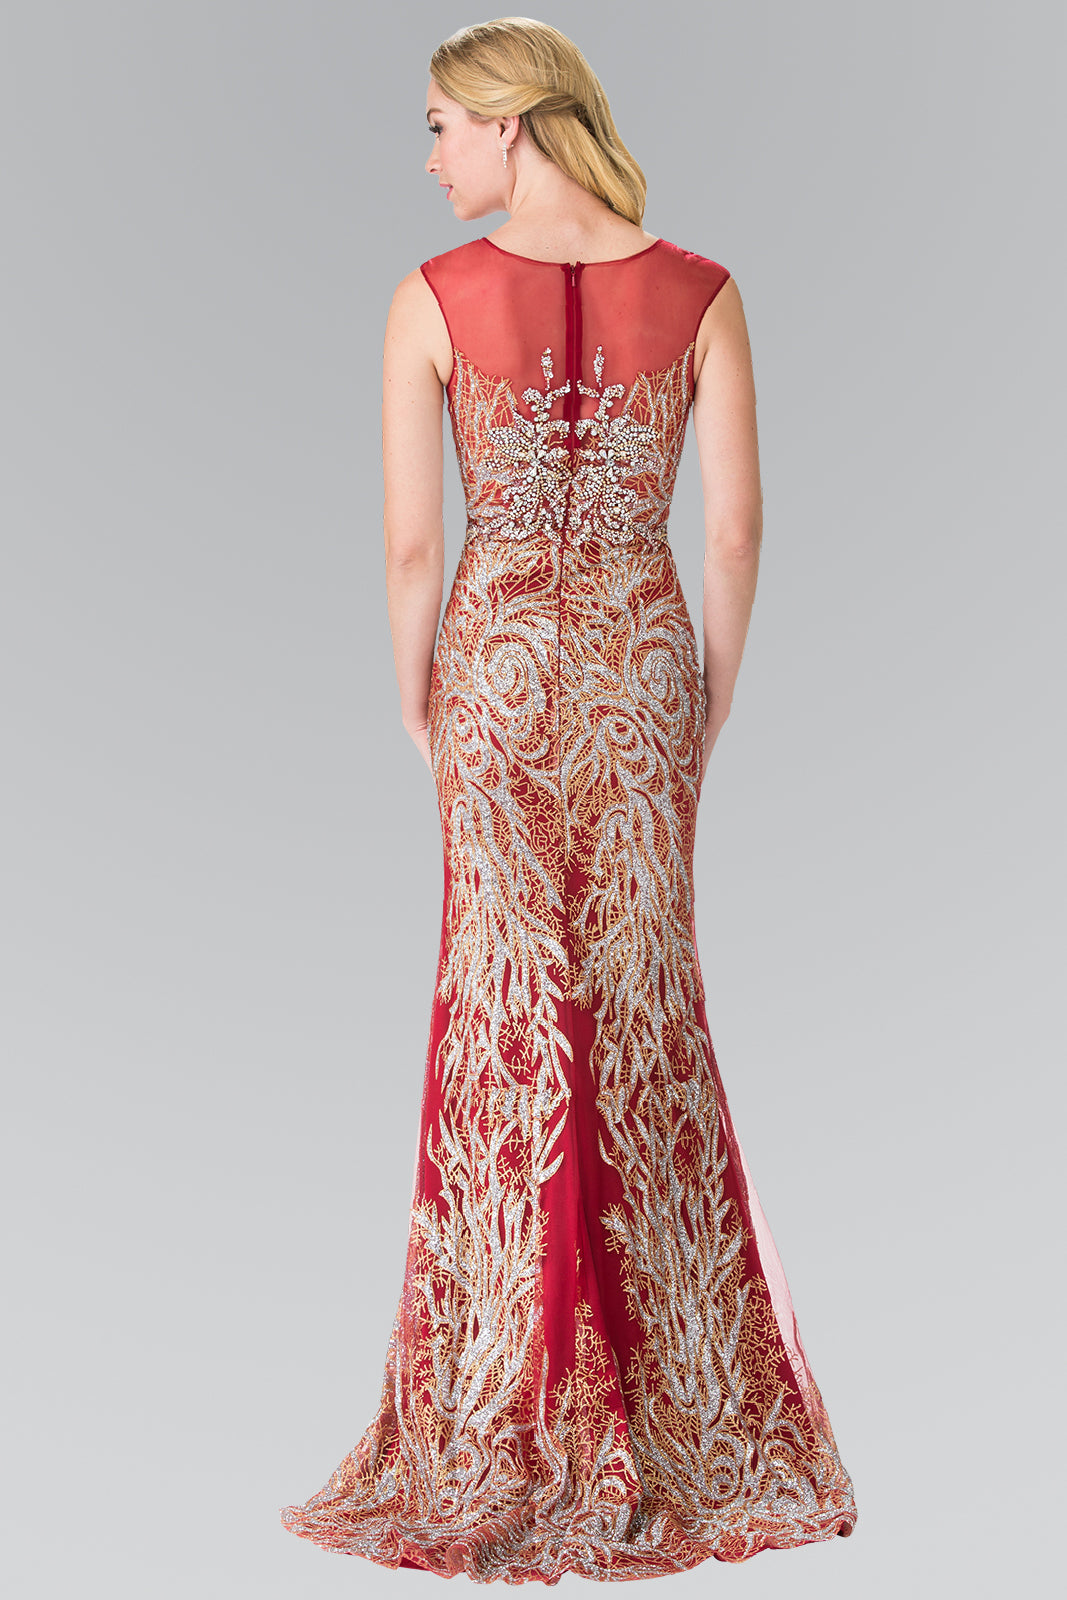 Beaded Bodice Long Dress with Full Embellishment-smcdress